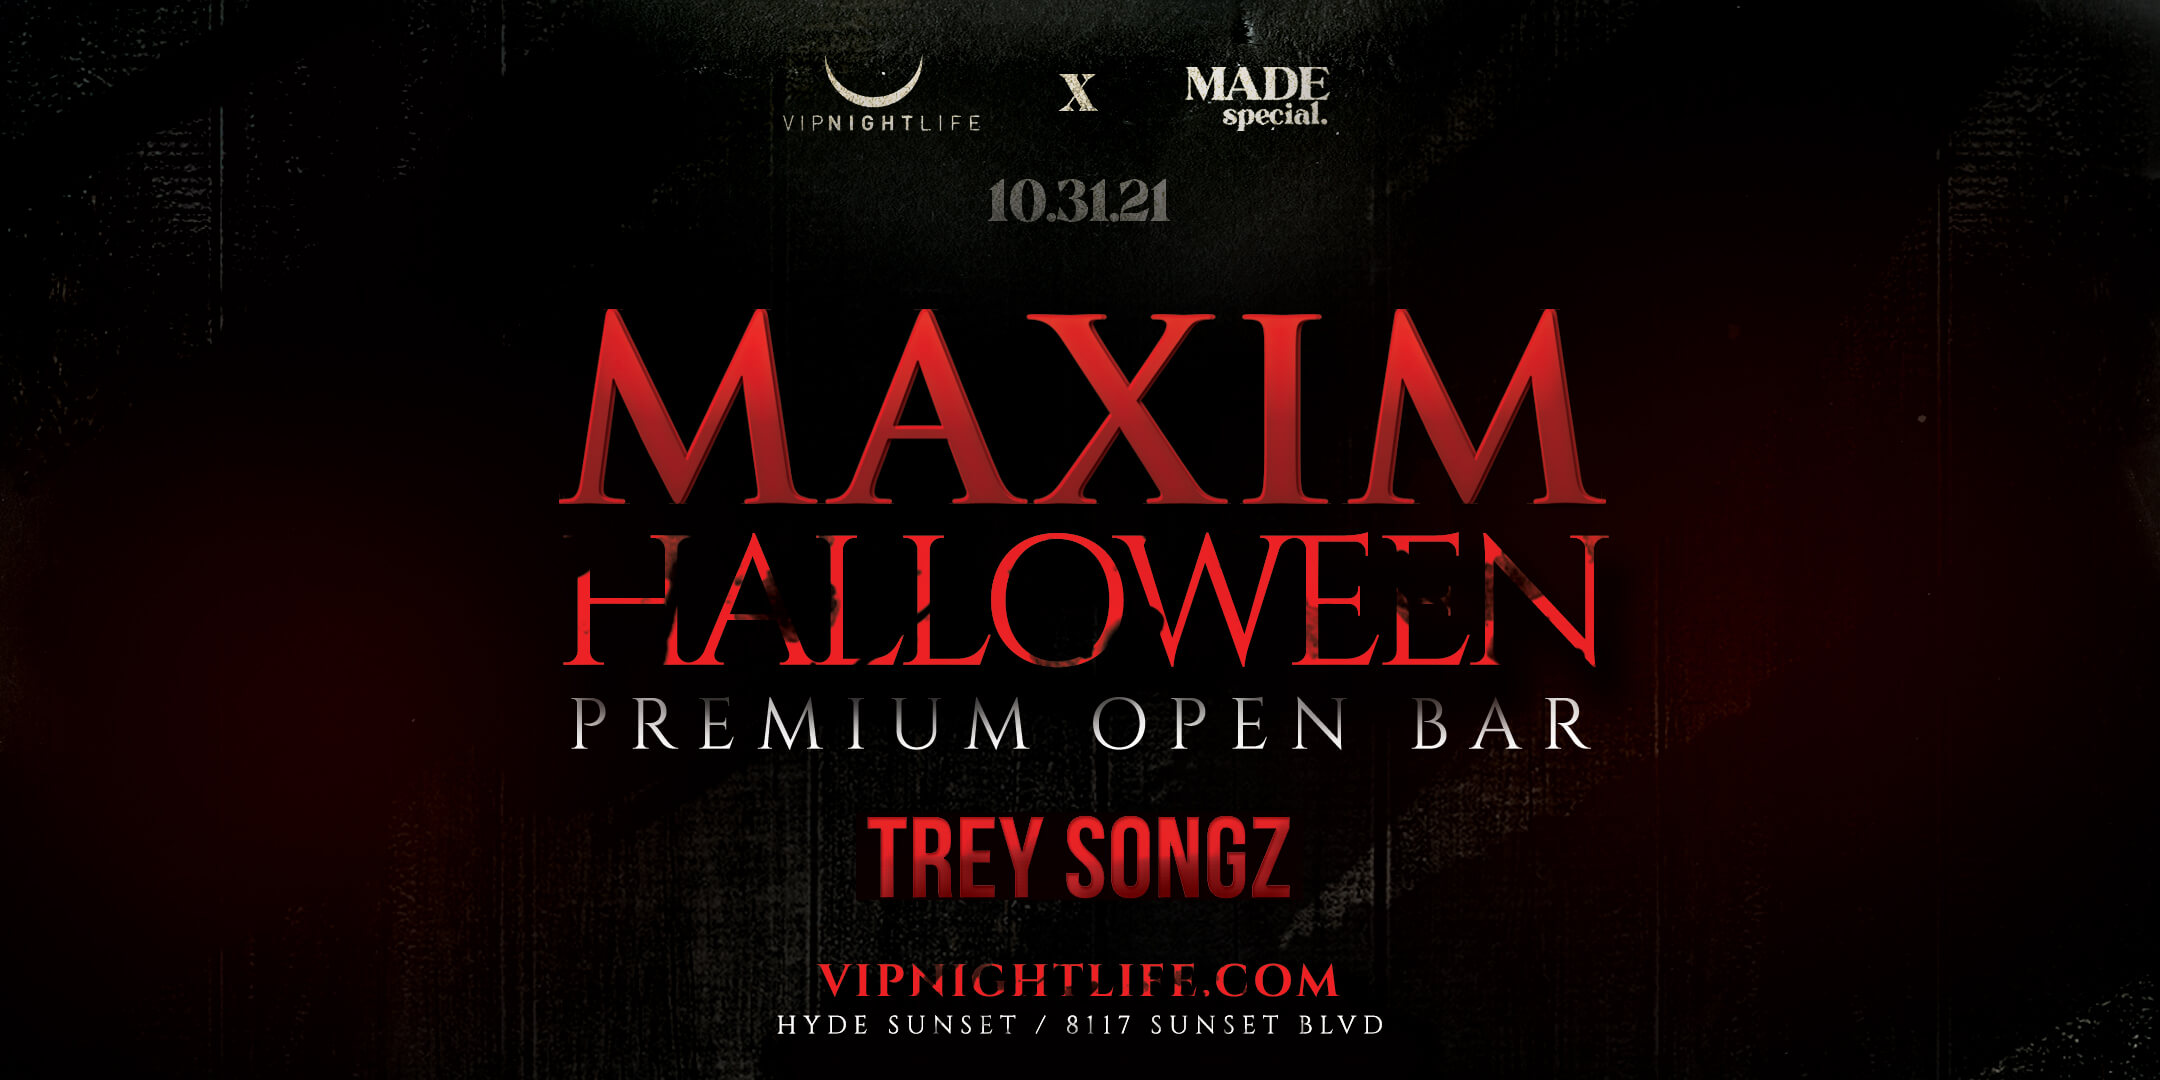 Maxim Halloween Party with Trey Songz | Los Angeles